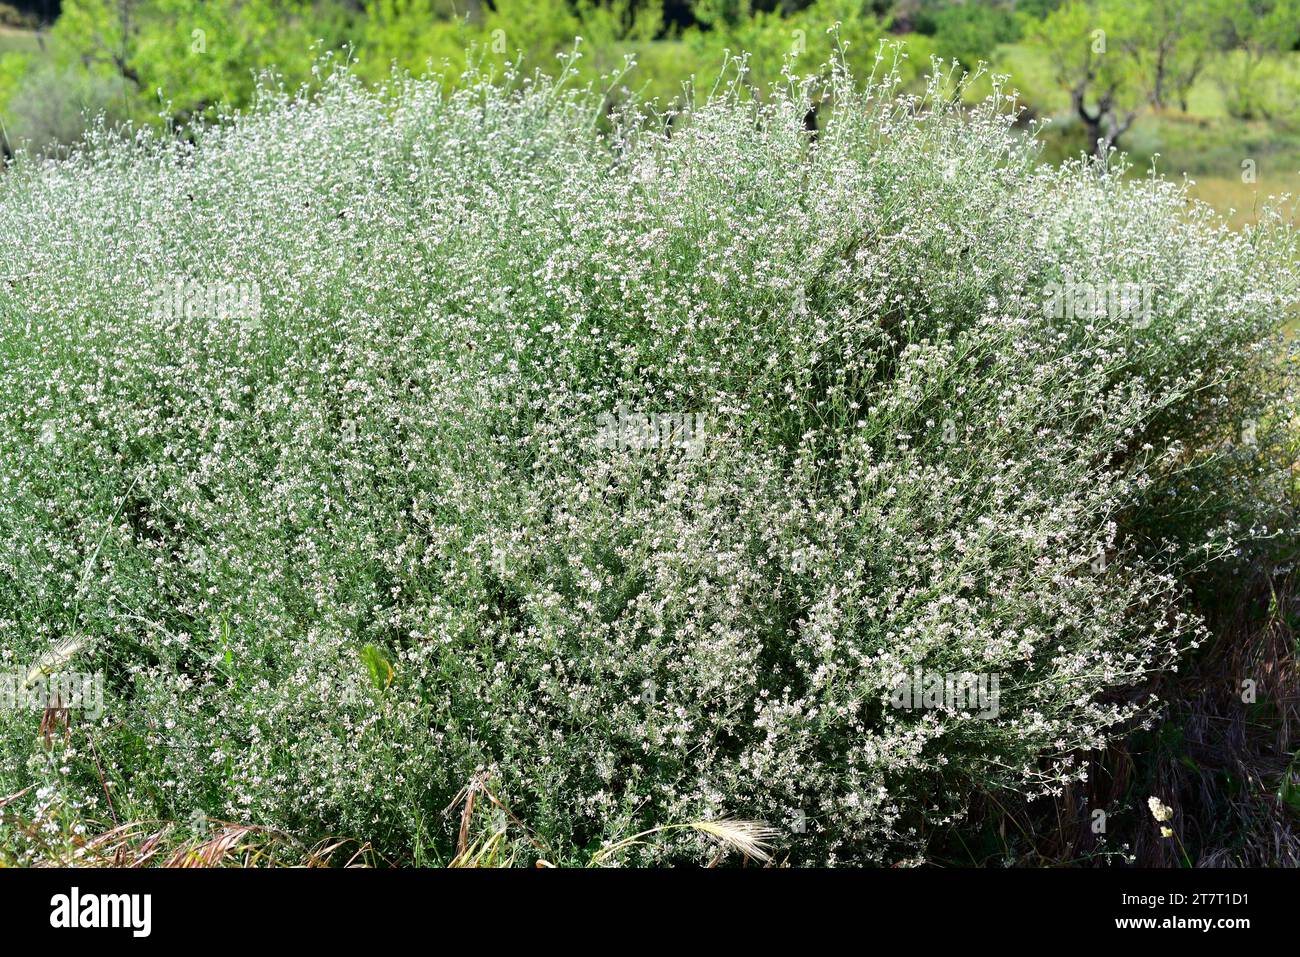 Boja blanca (Dorycnium pentaphyllum) is a perennial herb native to Mediterranean region. This photo was taken in Adahuesca, Huesca, Aragon, Spain. Stock Photo